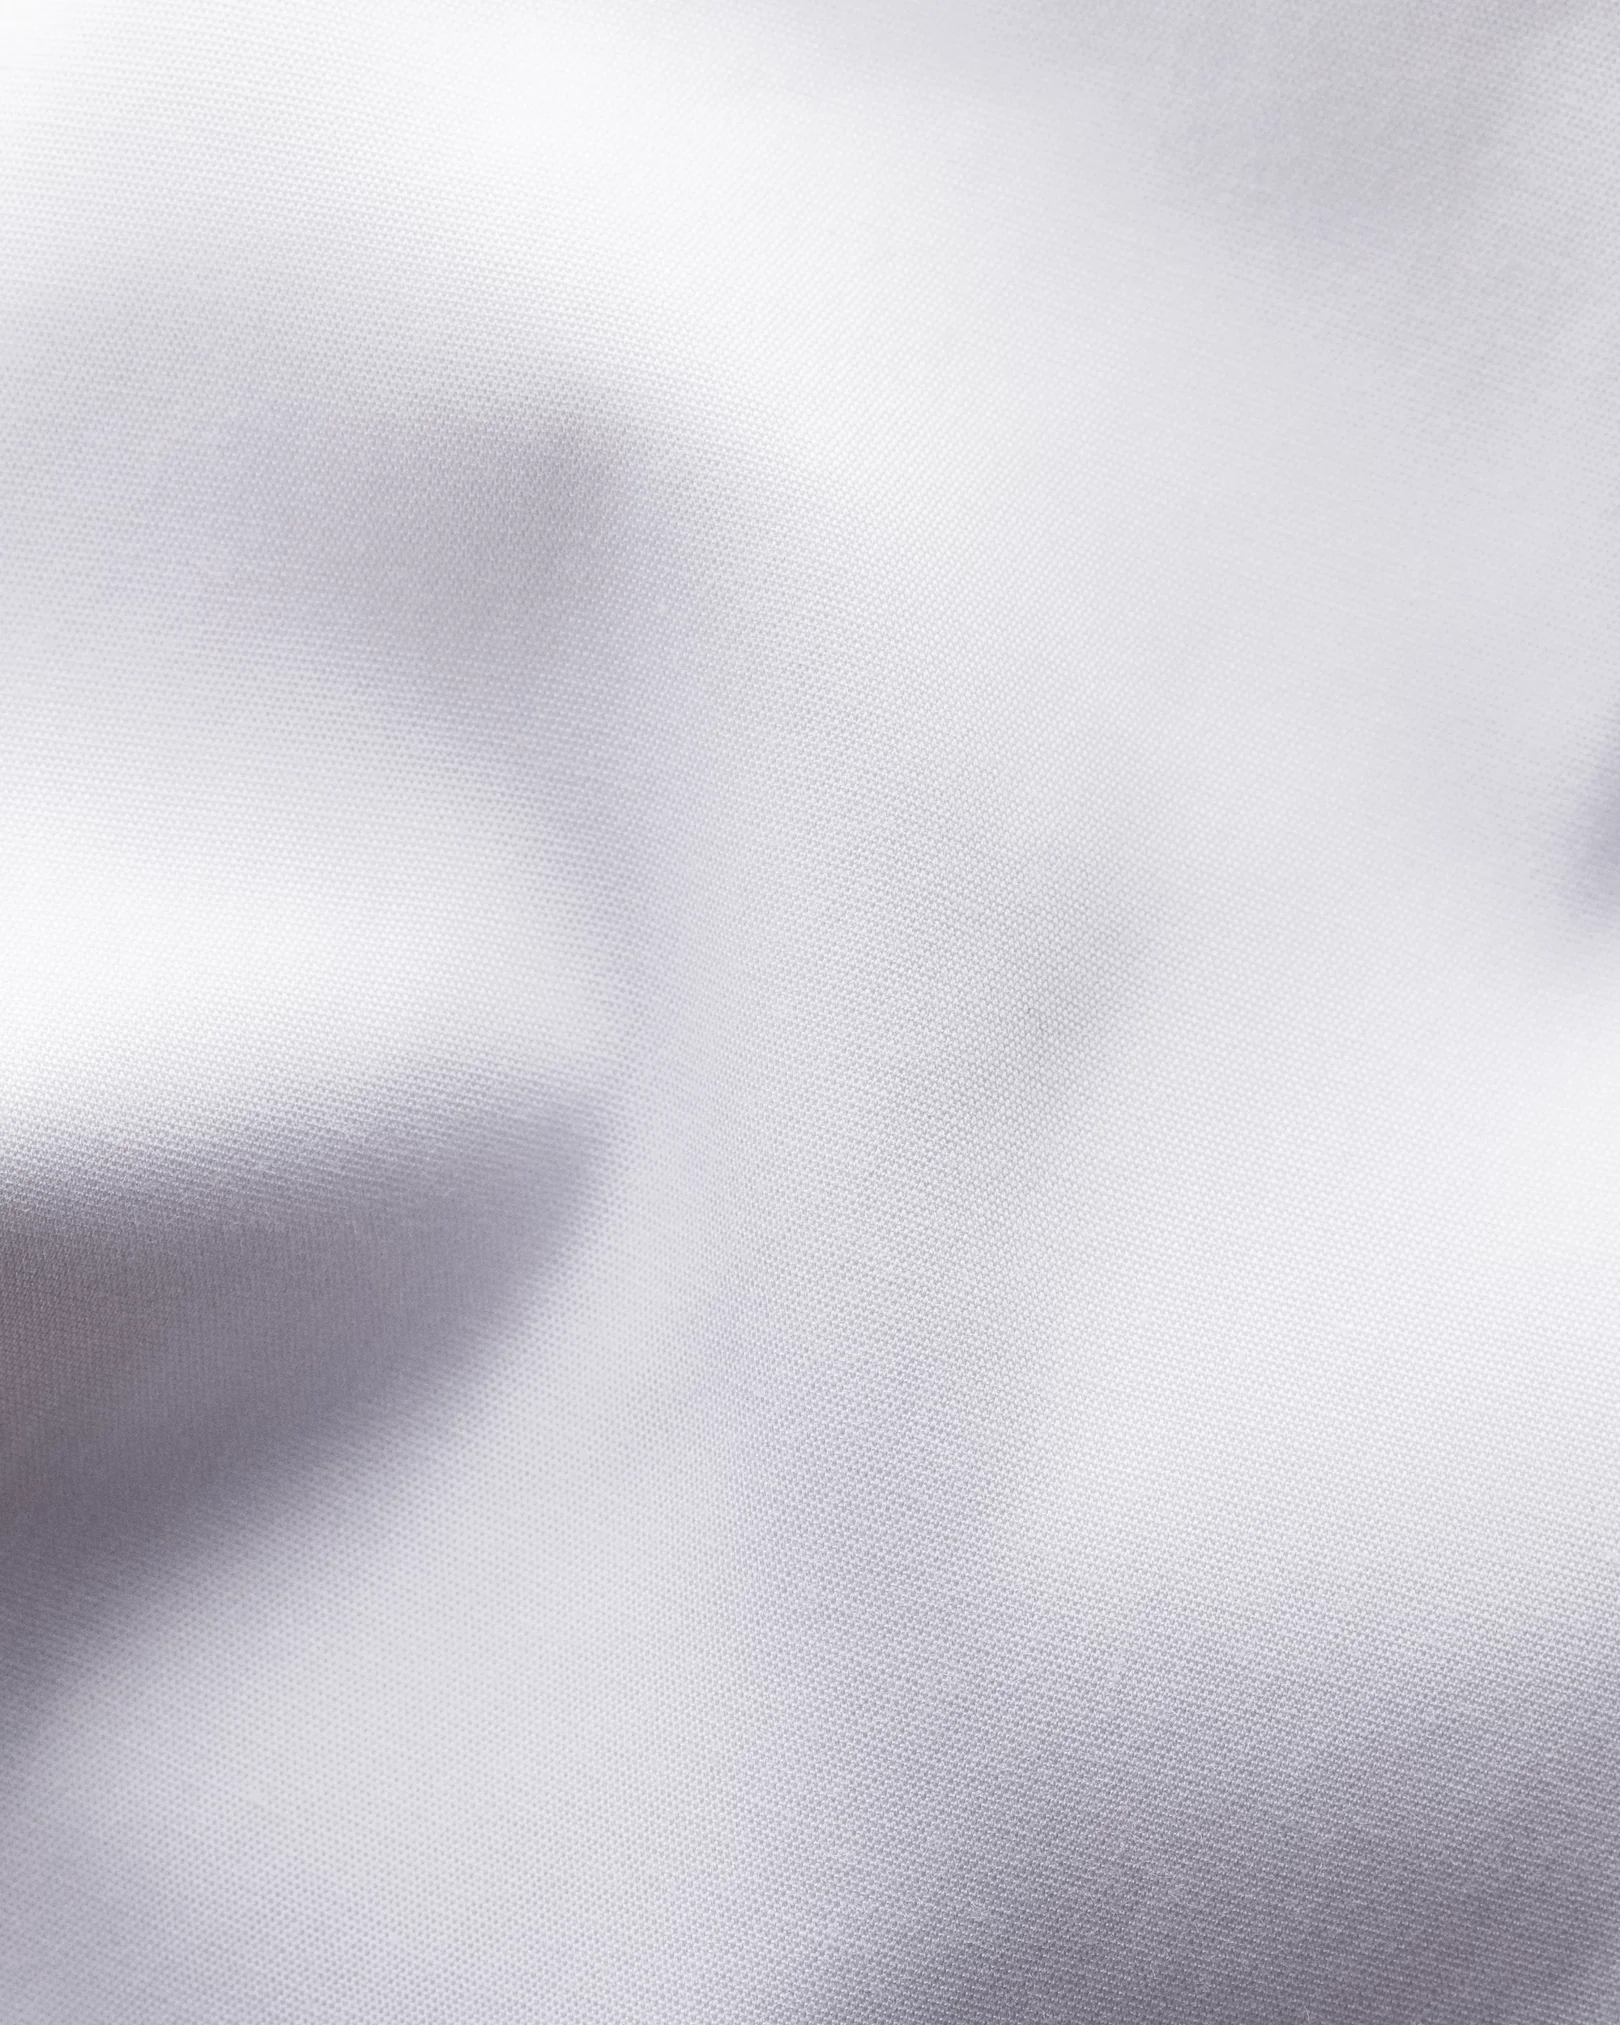 Eton - white poplin shirt glass print details